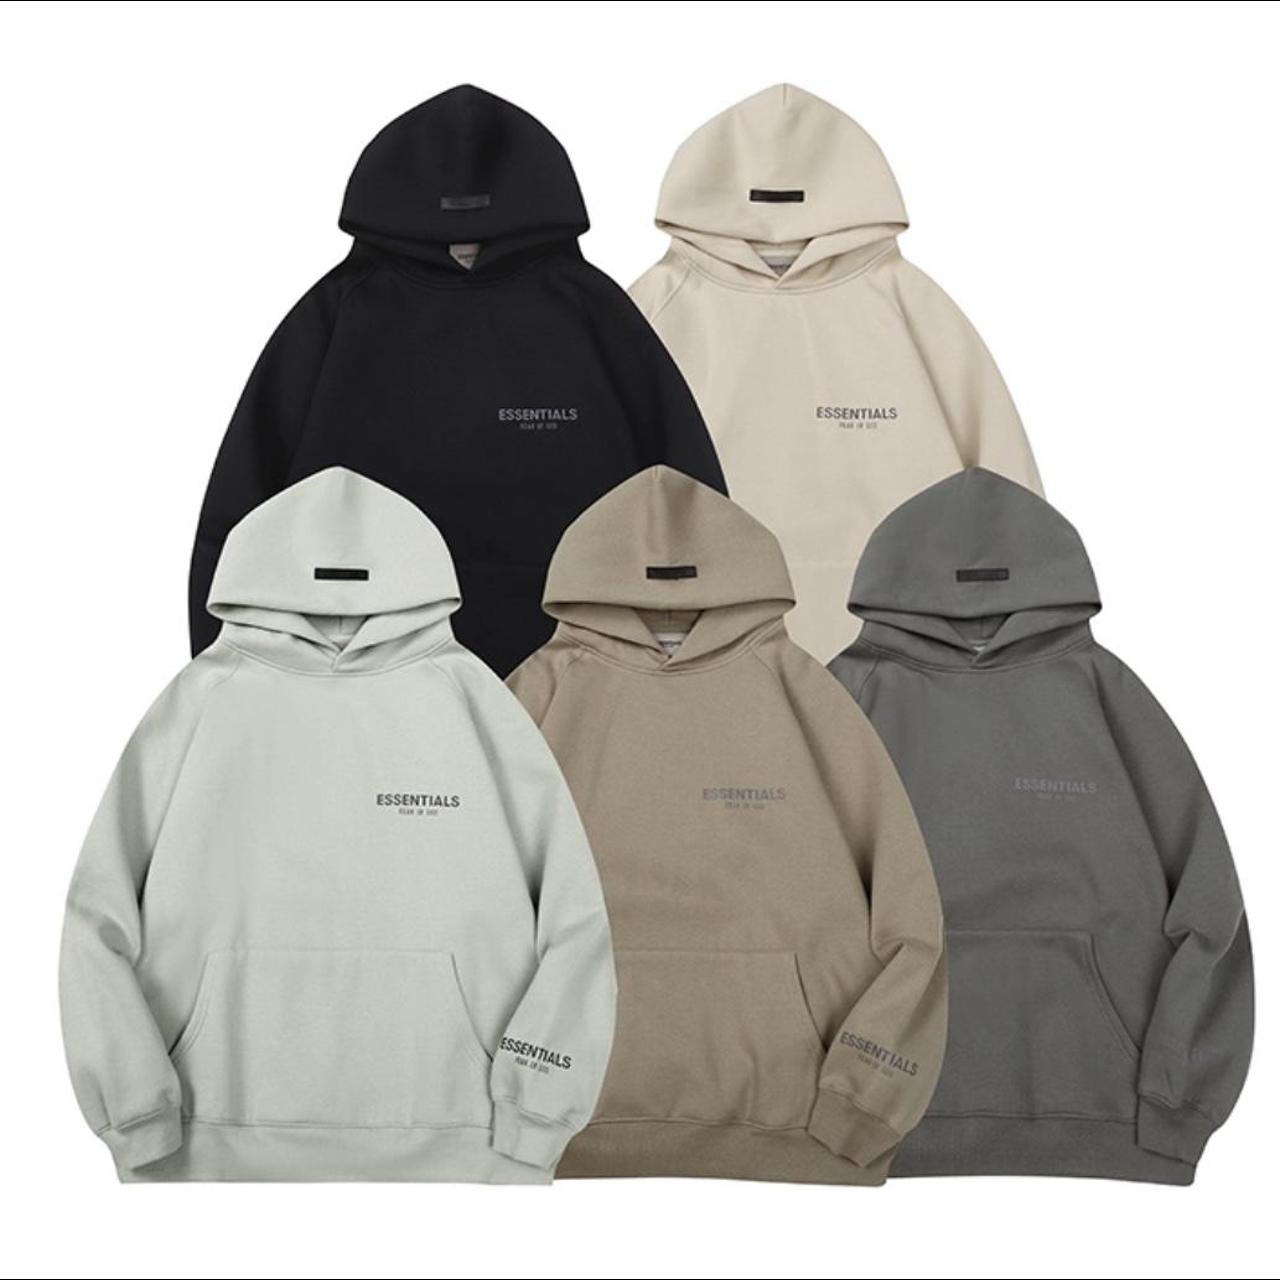 Brand new Essentials Fog hoodies (Taking offers) - Depop